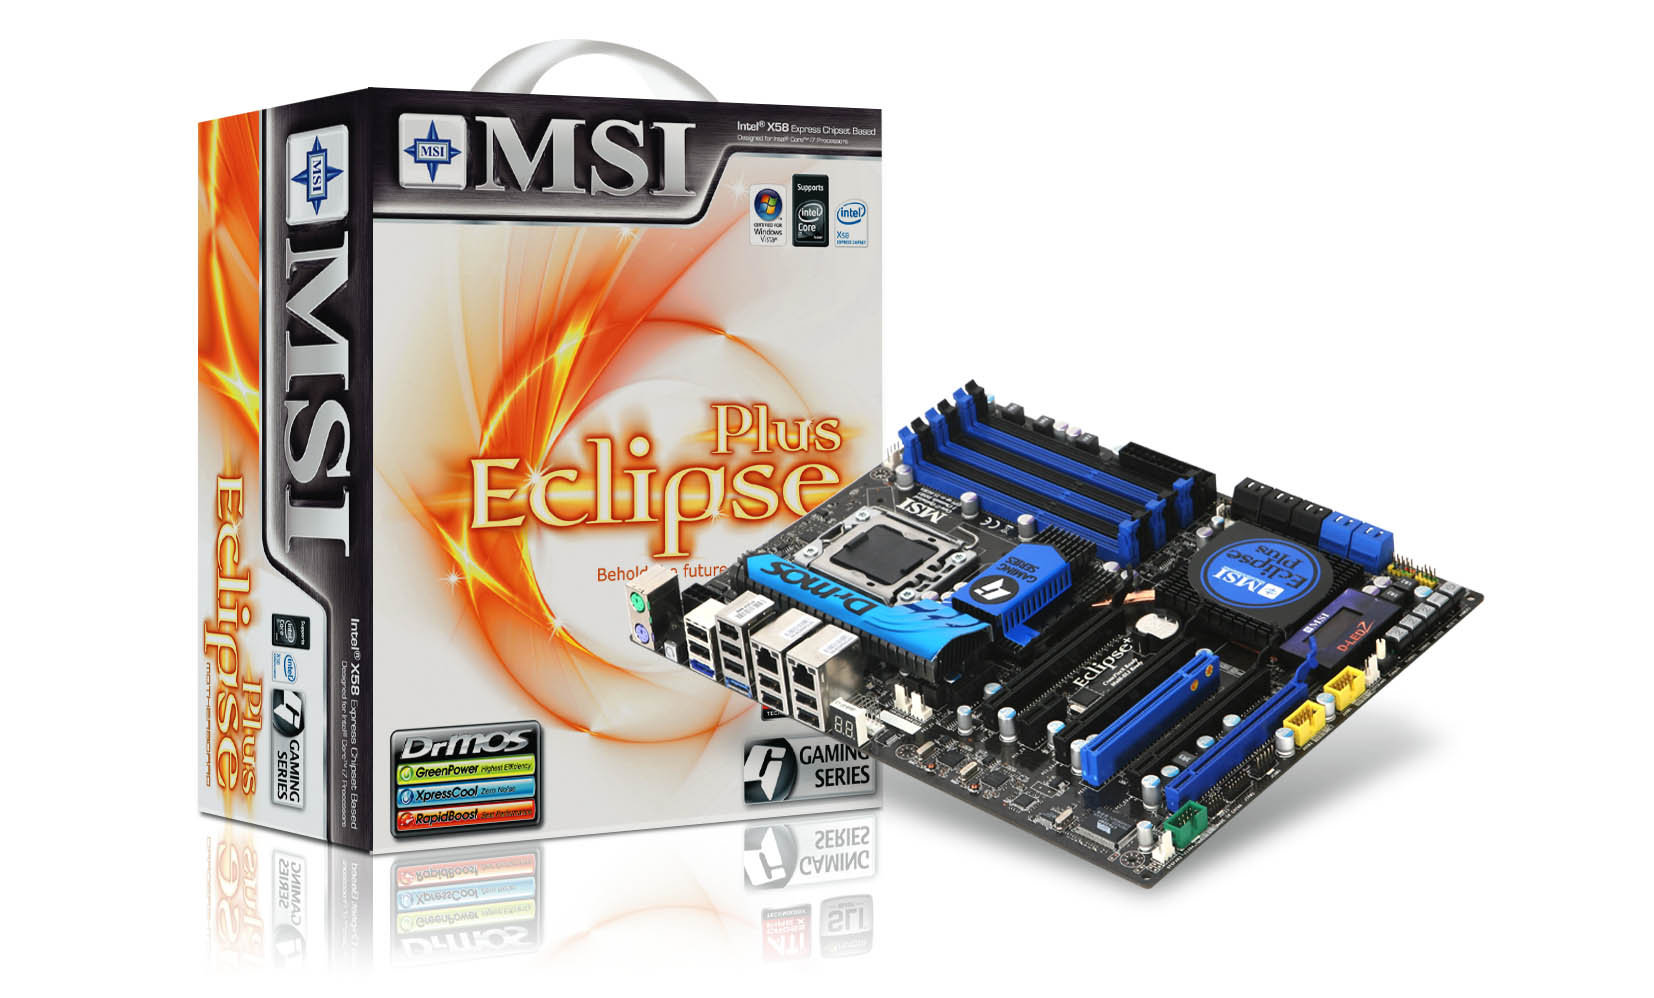 MSI Eclipse Plus